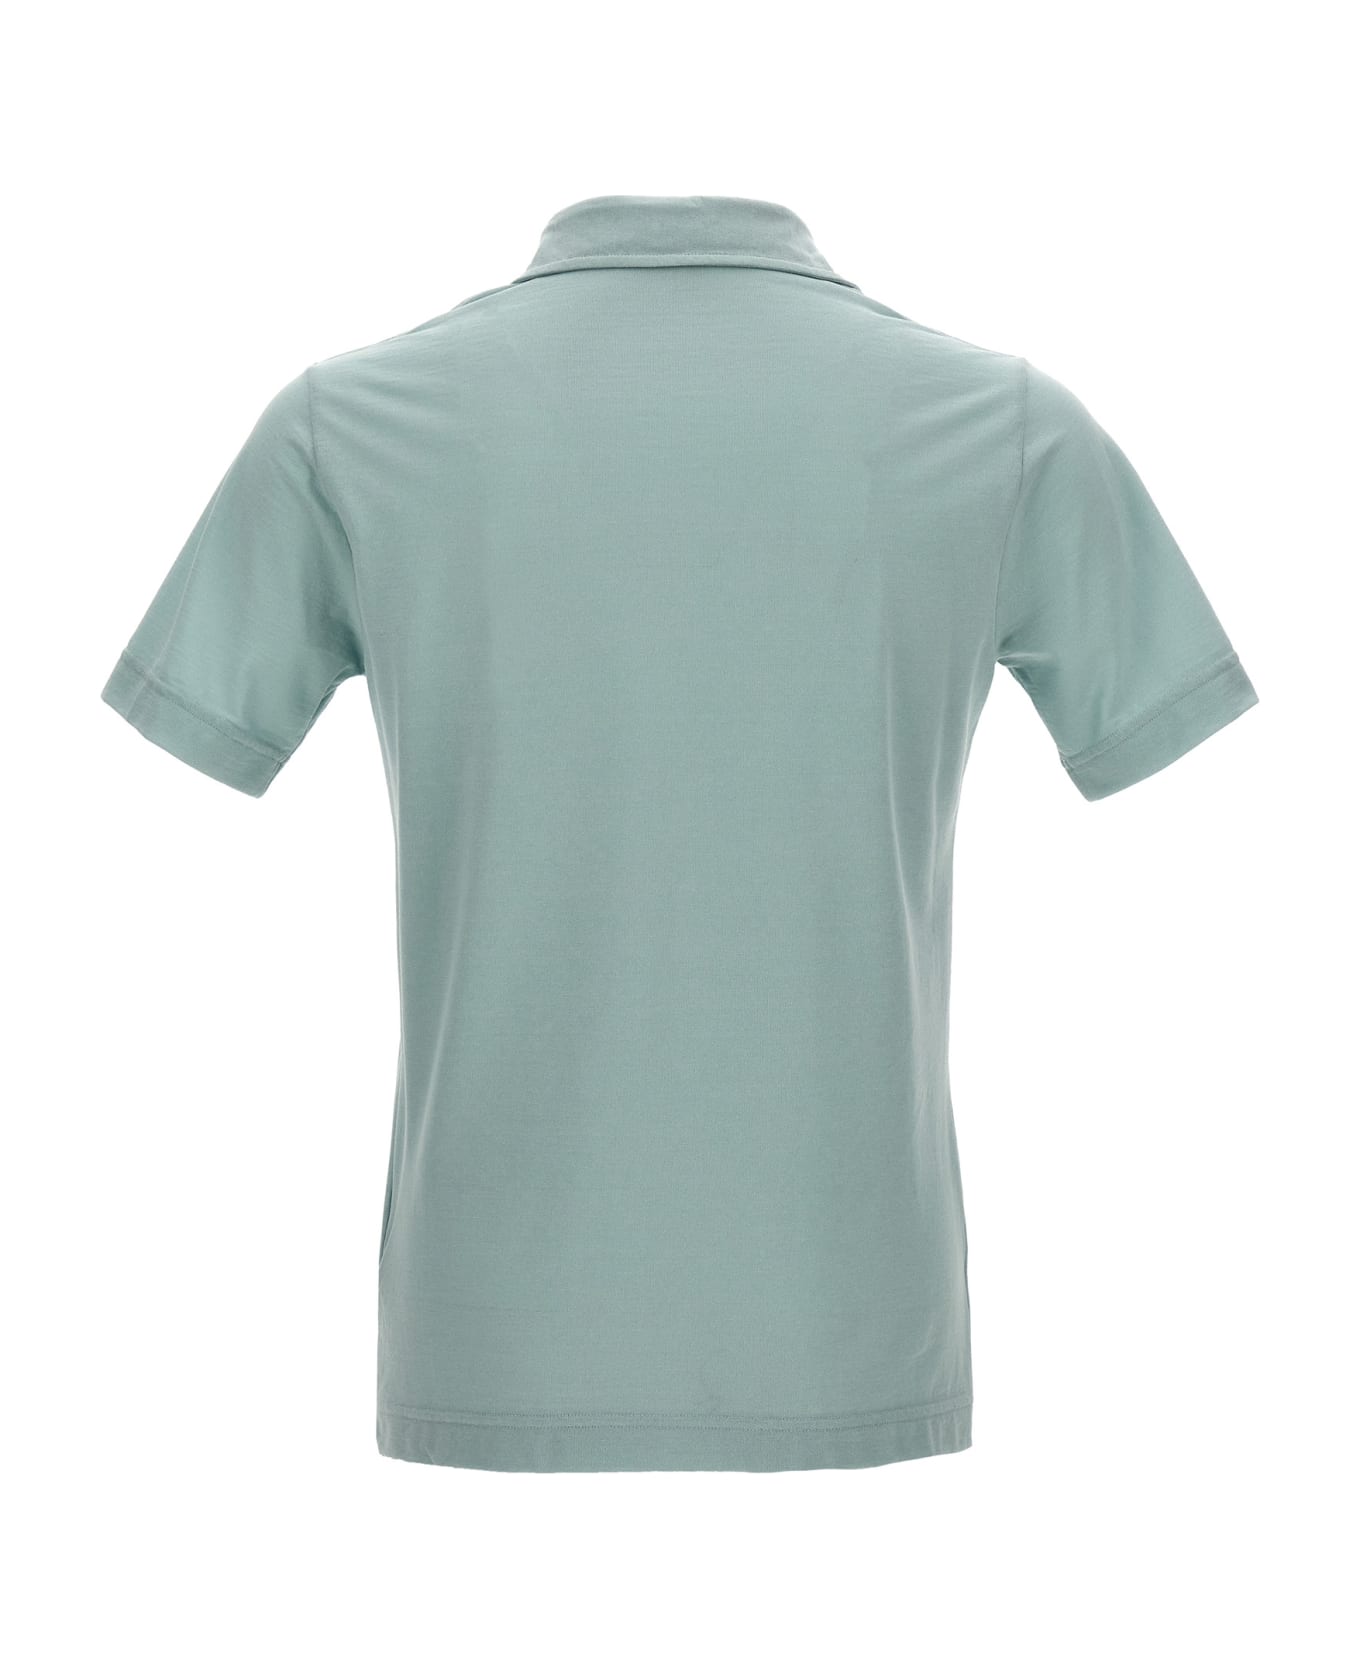 Zanone Ice Cotton Polo Shirt - Ceruleo